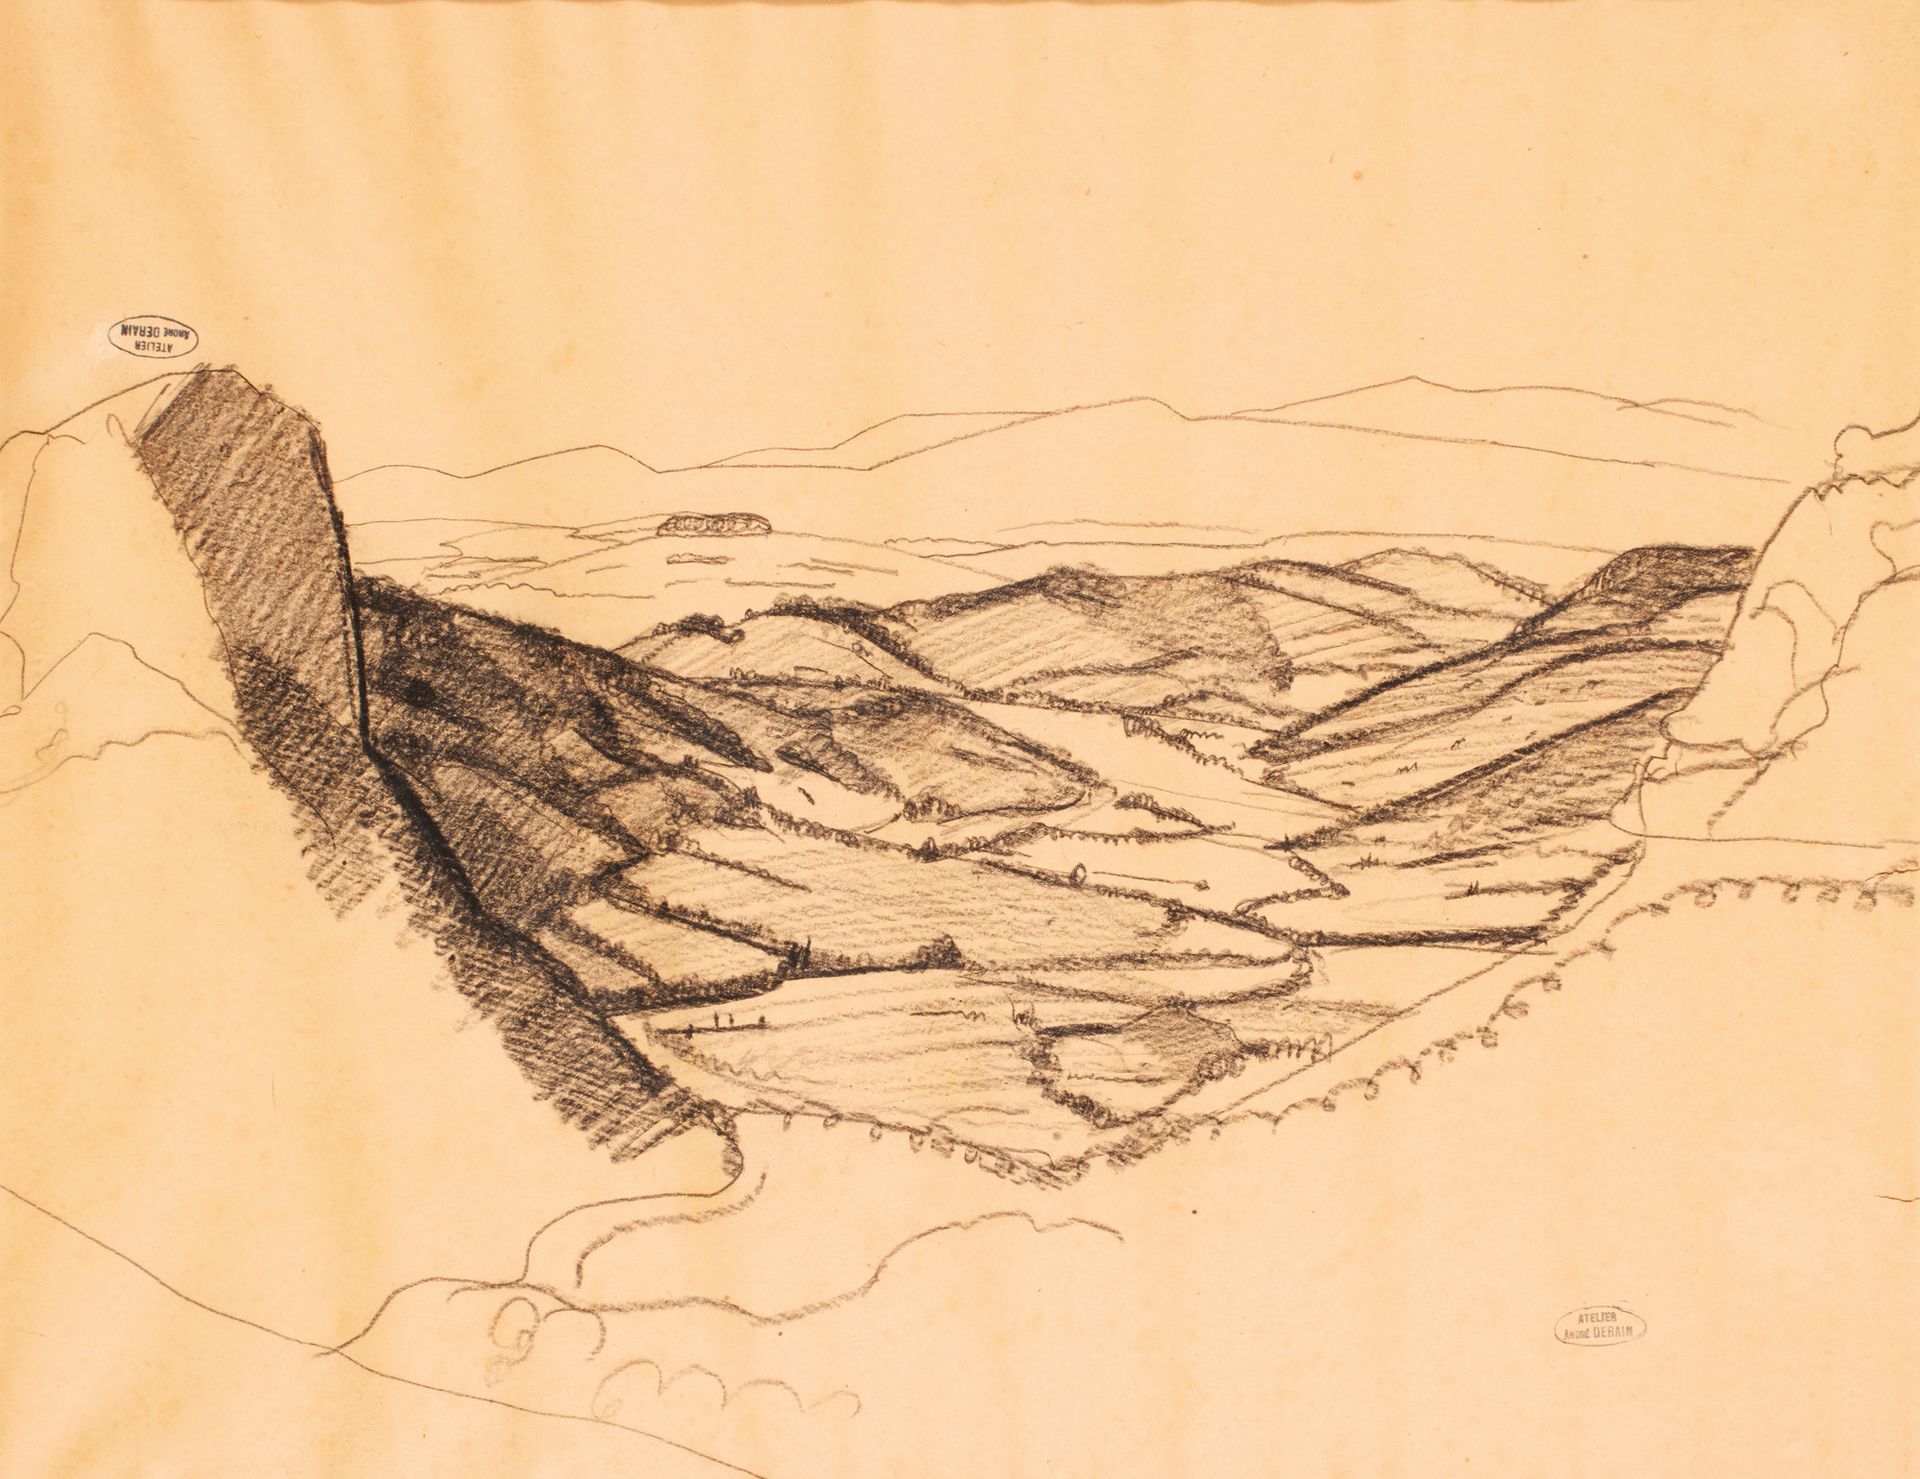 André DERAIN (1880-1954) 安德烈-德兰(André DERAIN) (1880-1954)

丘陵景观

纸上炭笔，两个工作室的印章。
&hellip;